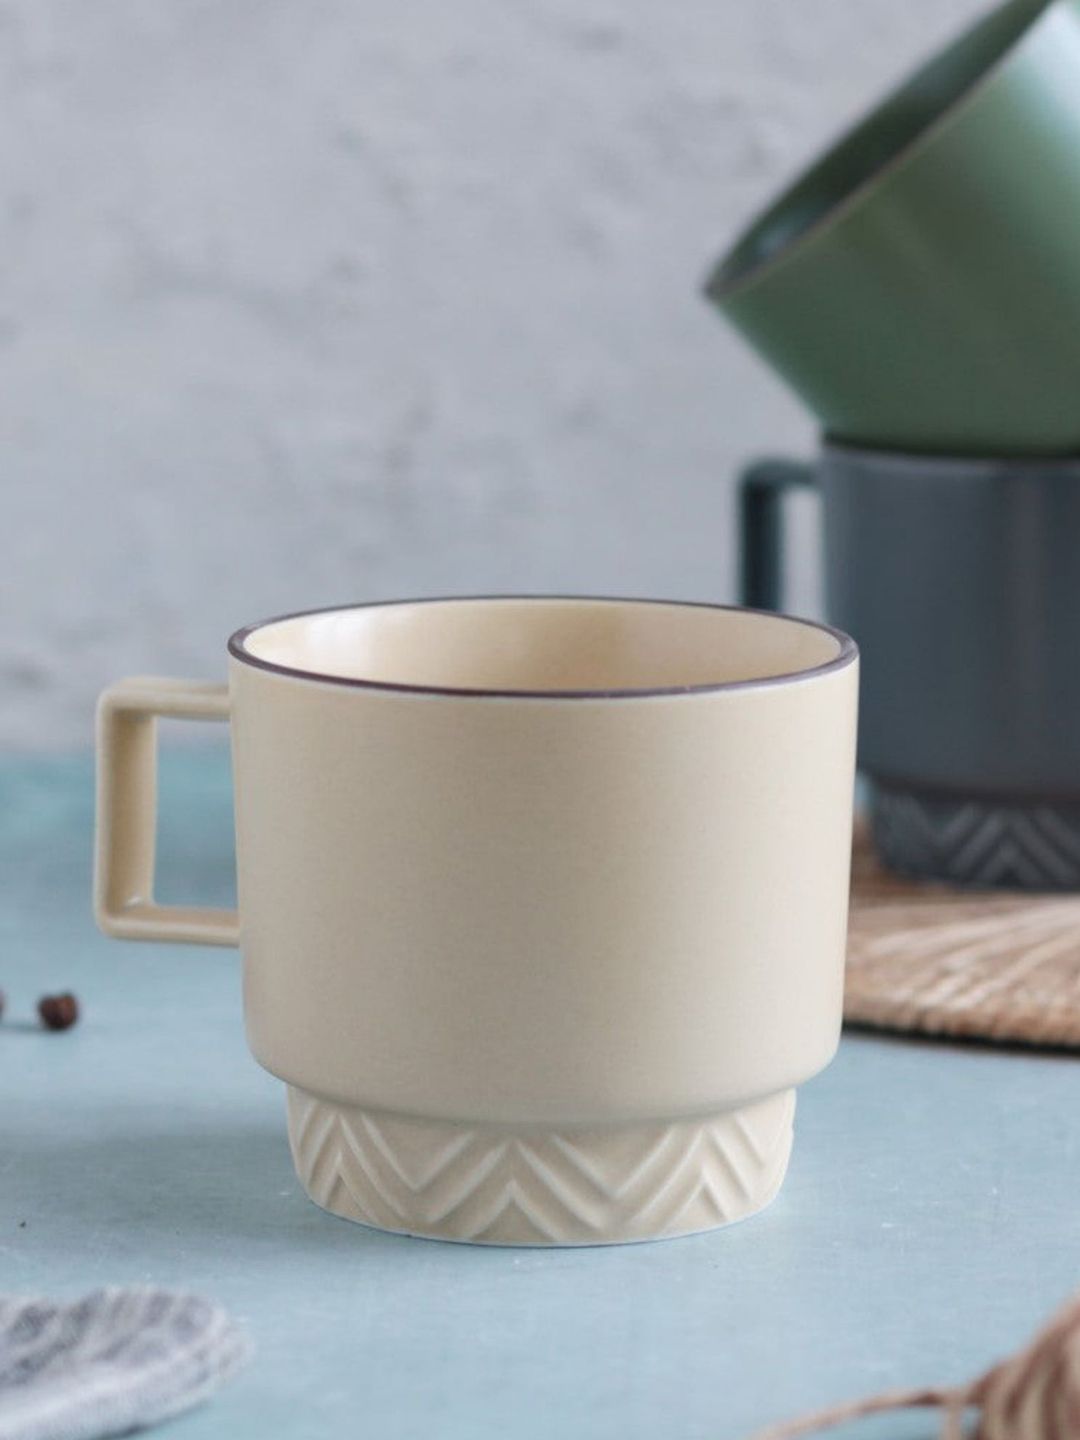 Nestasia White Ceramic Cup For Coffee Price in India